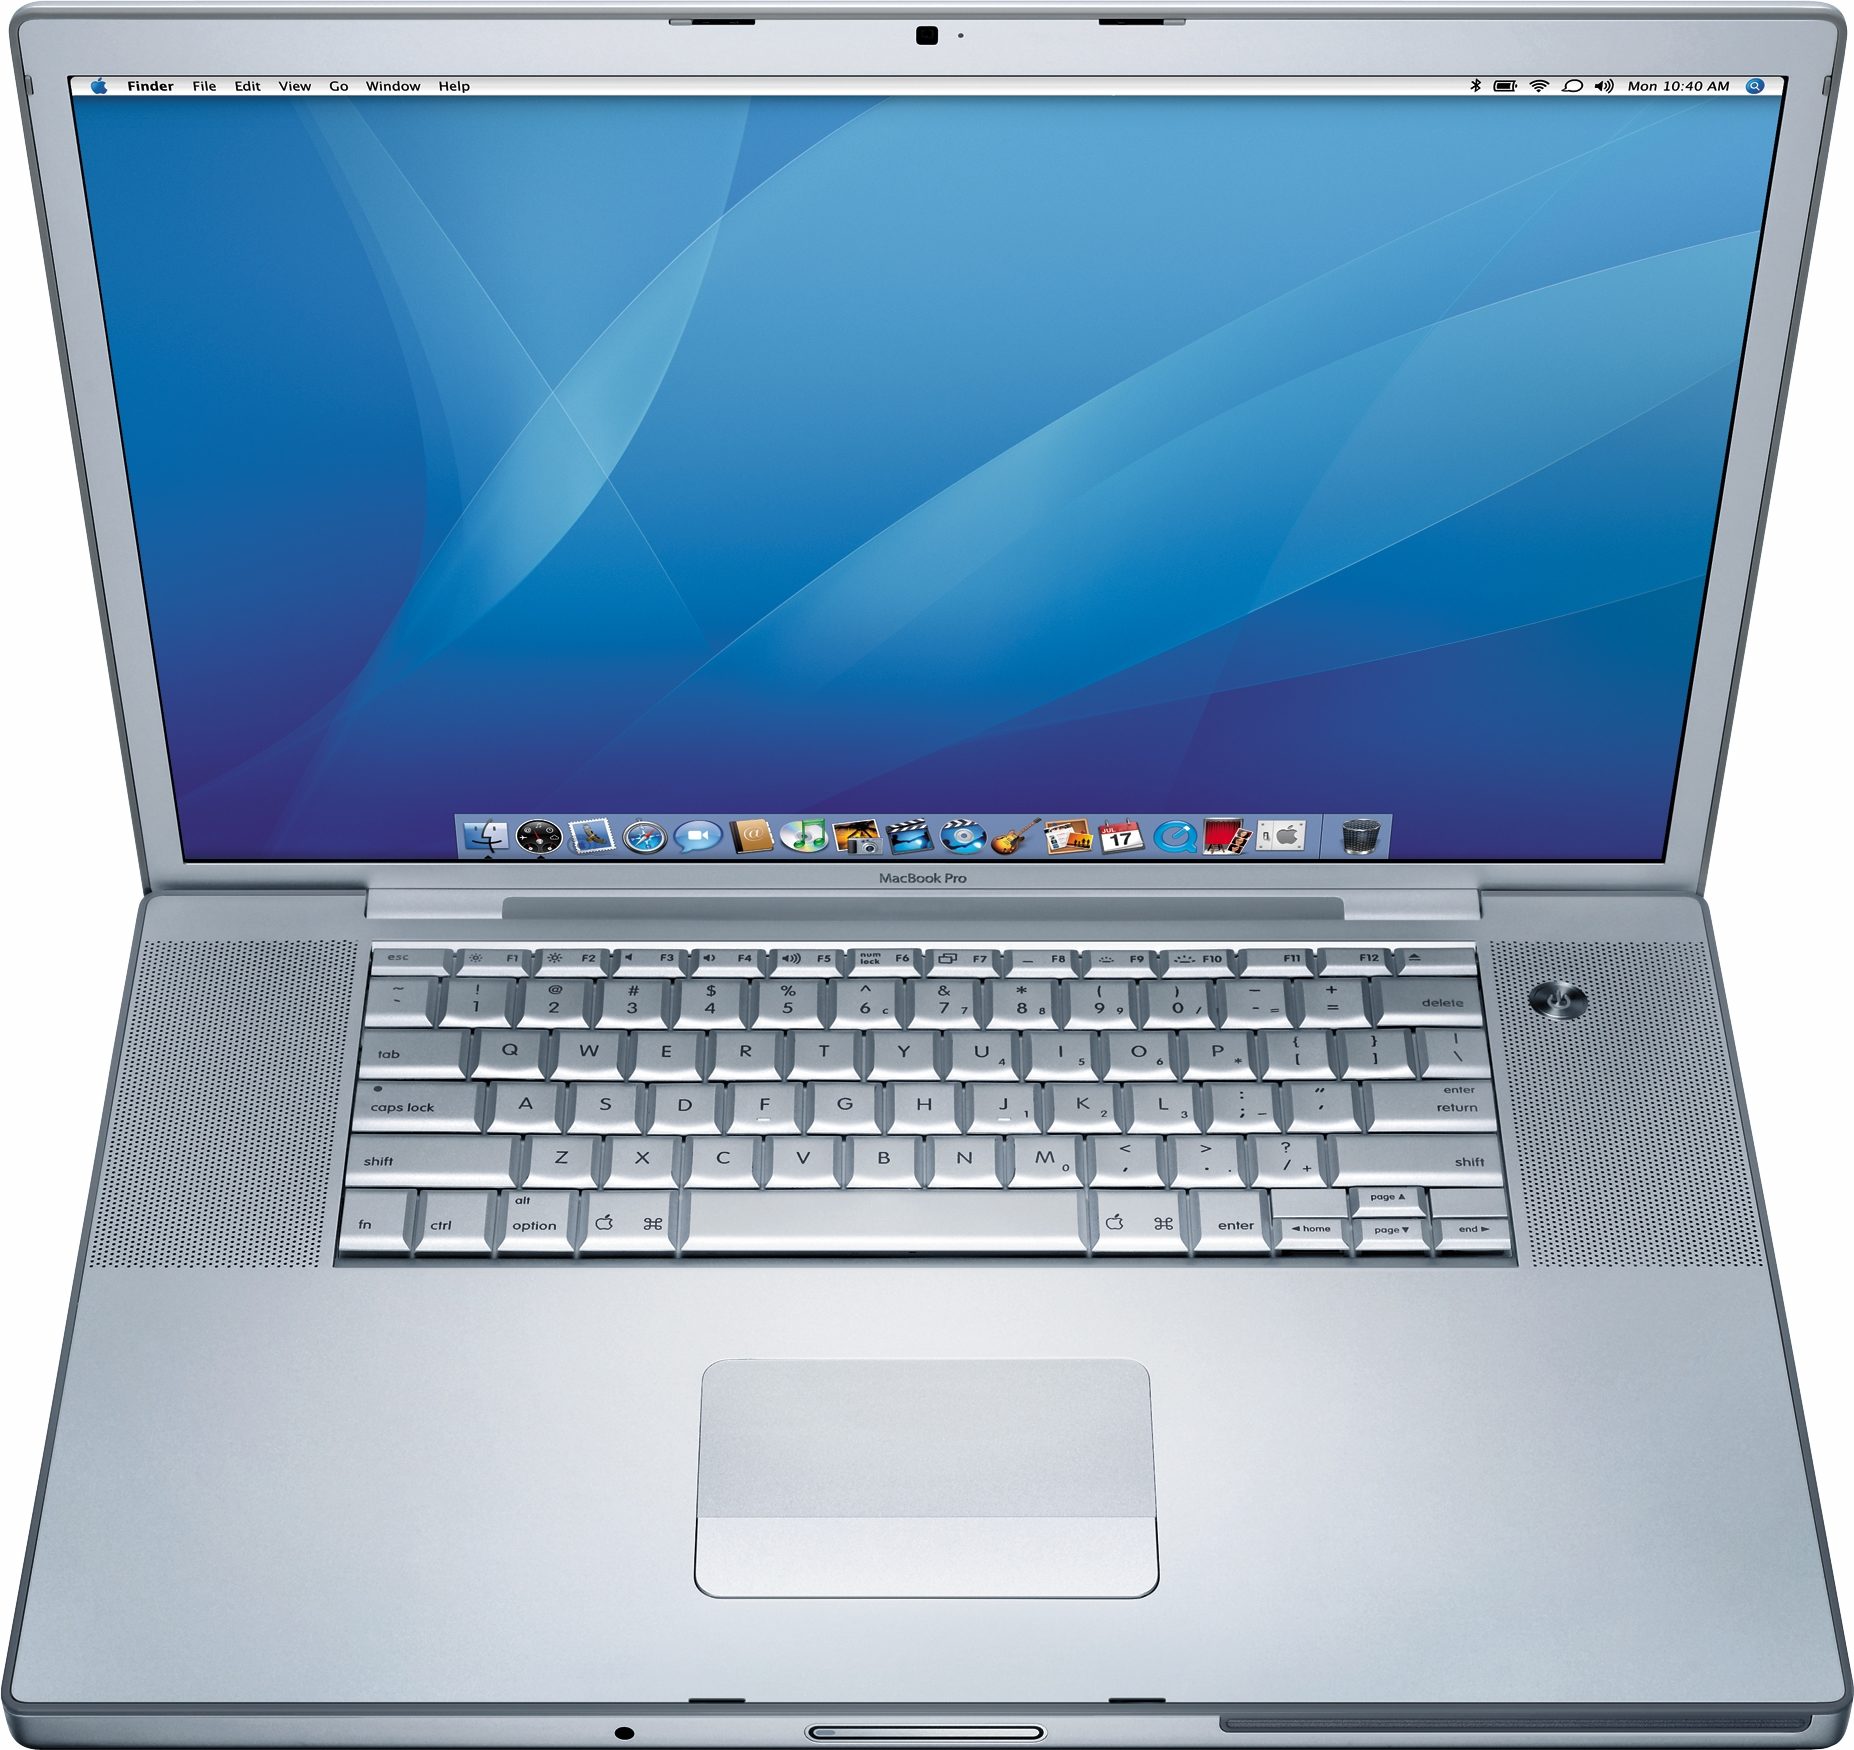 Apple MacBook Pro Notebook Computer | zZounds